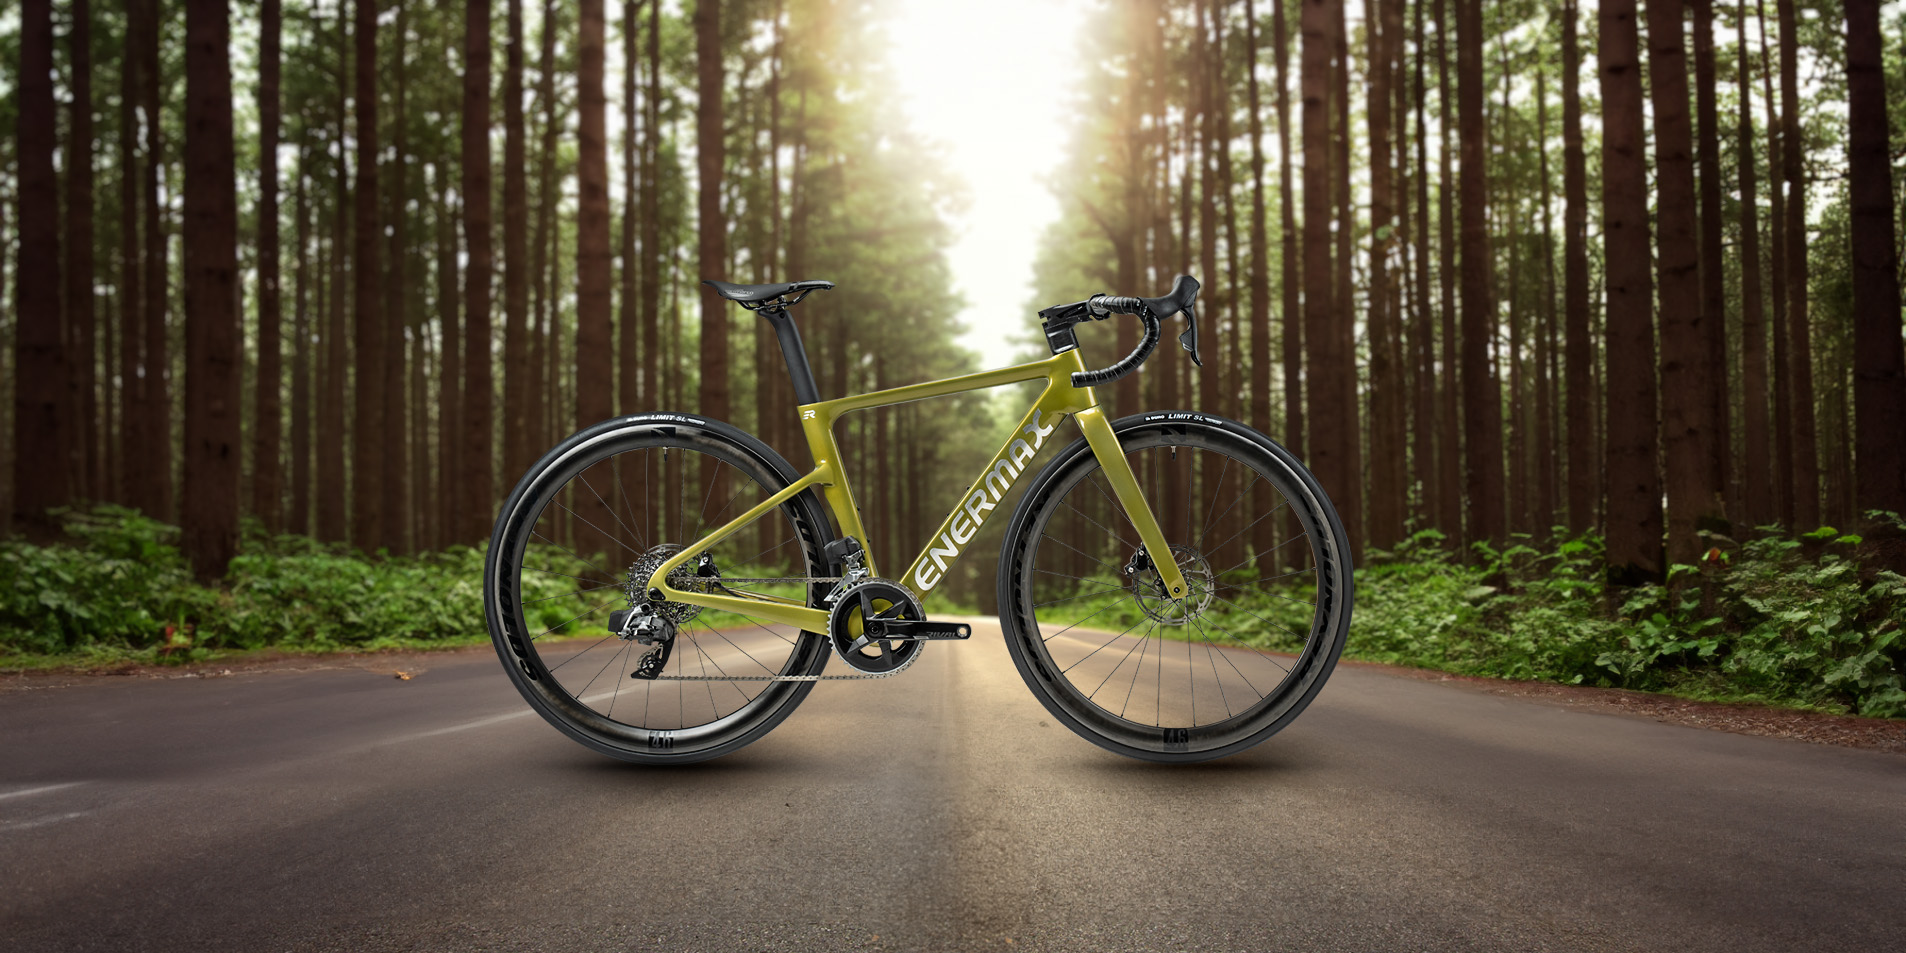 ENEREX 安銳-經典版 專業碳纖公路競賽用自行車在森林公路